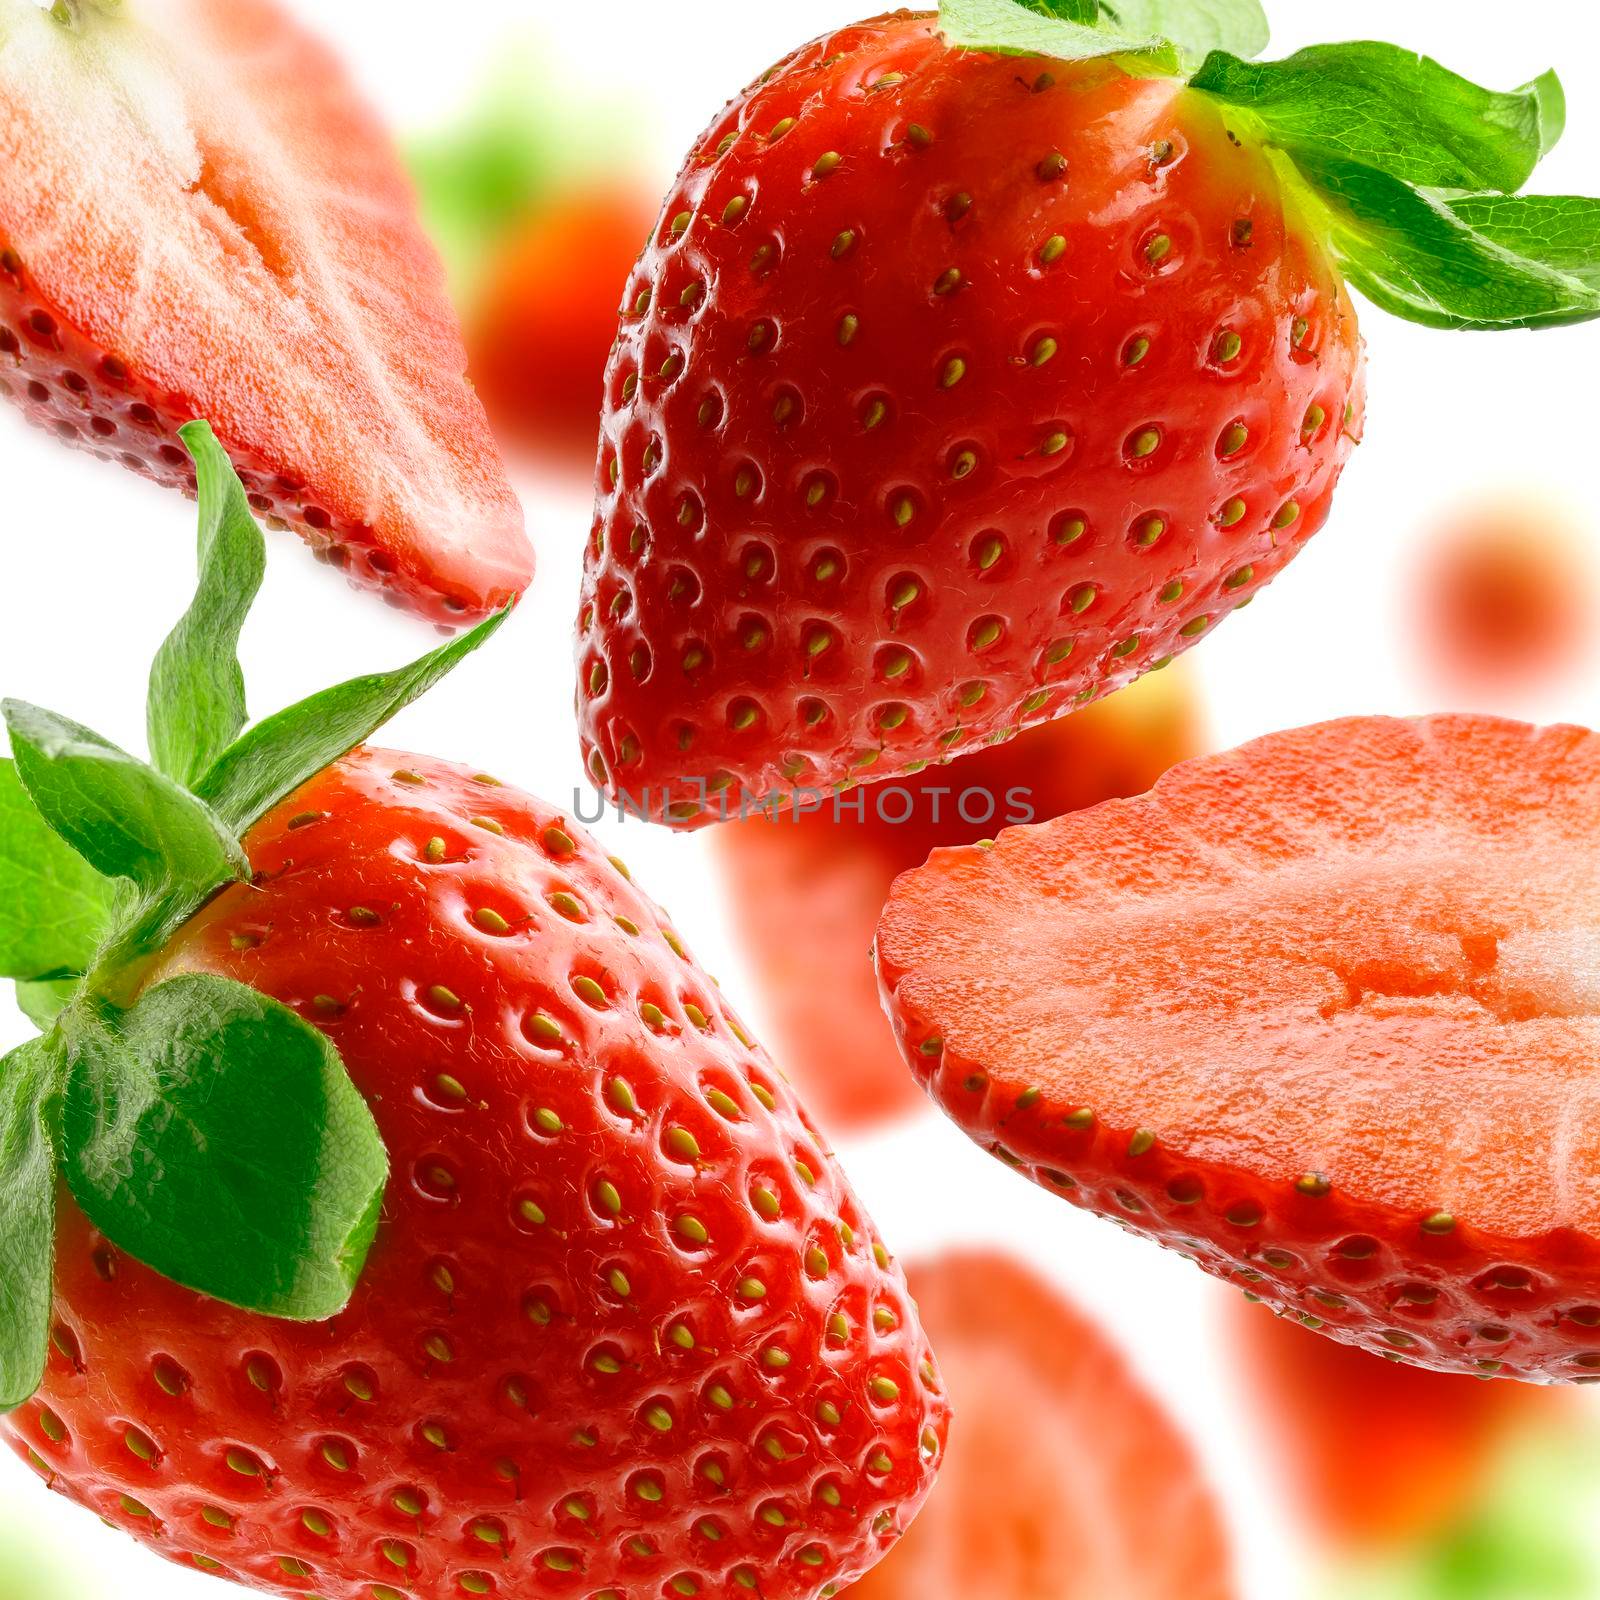 Strawberry close-up isolated on white background.